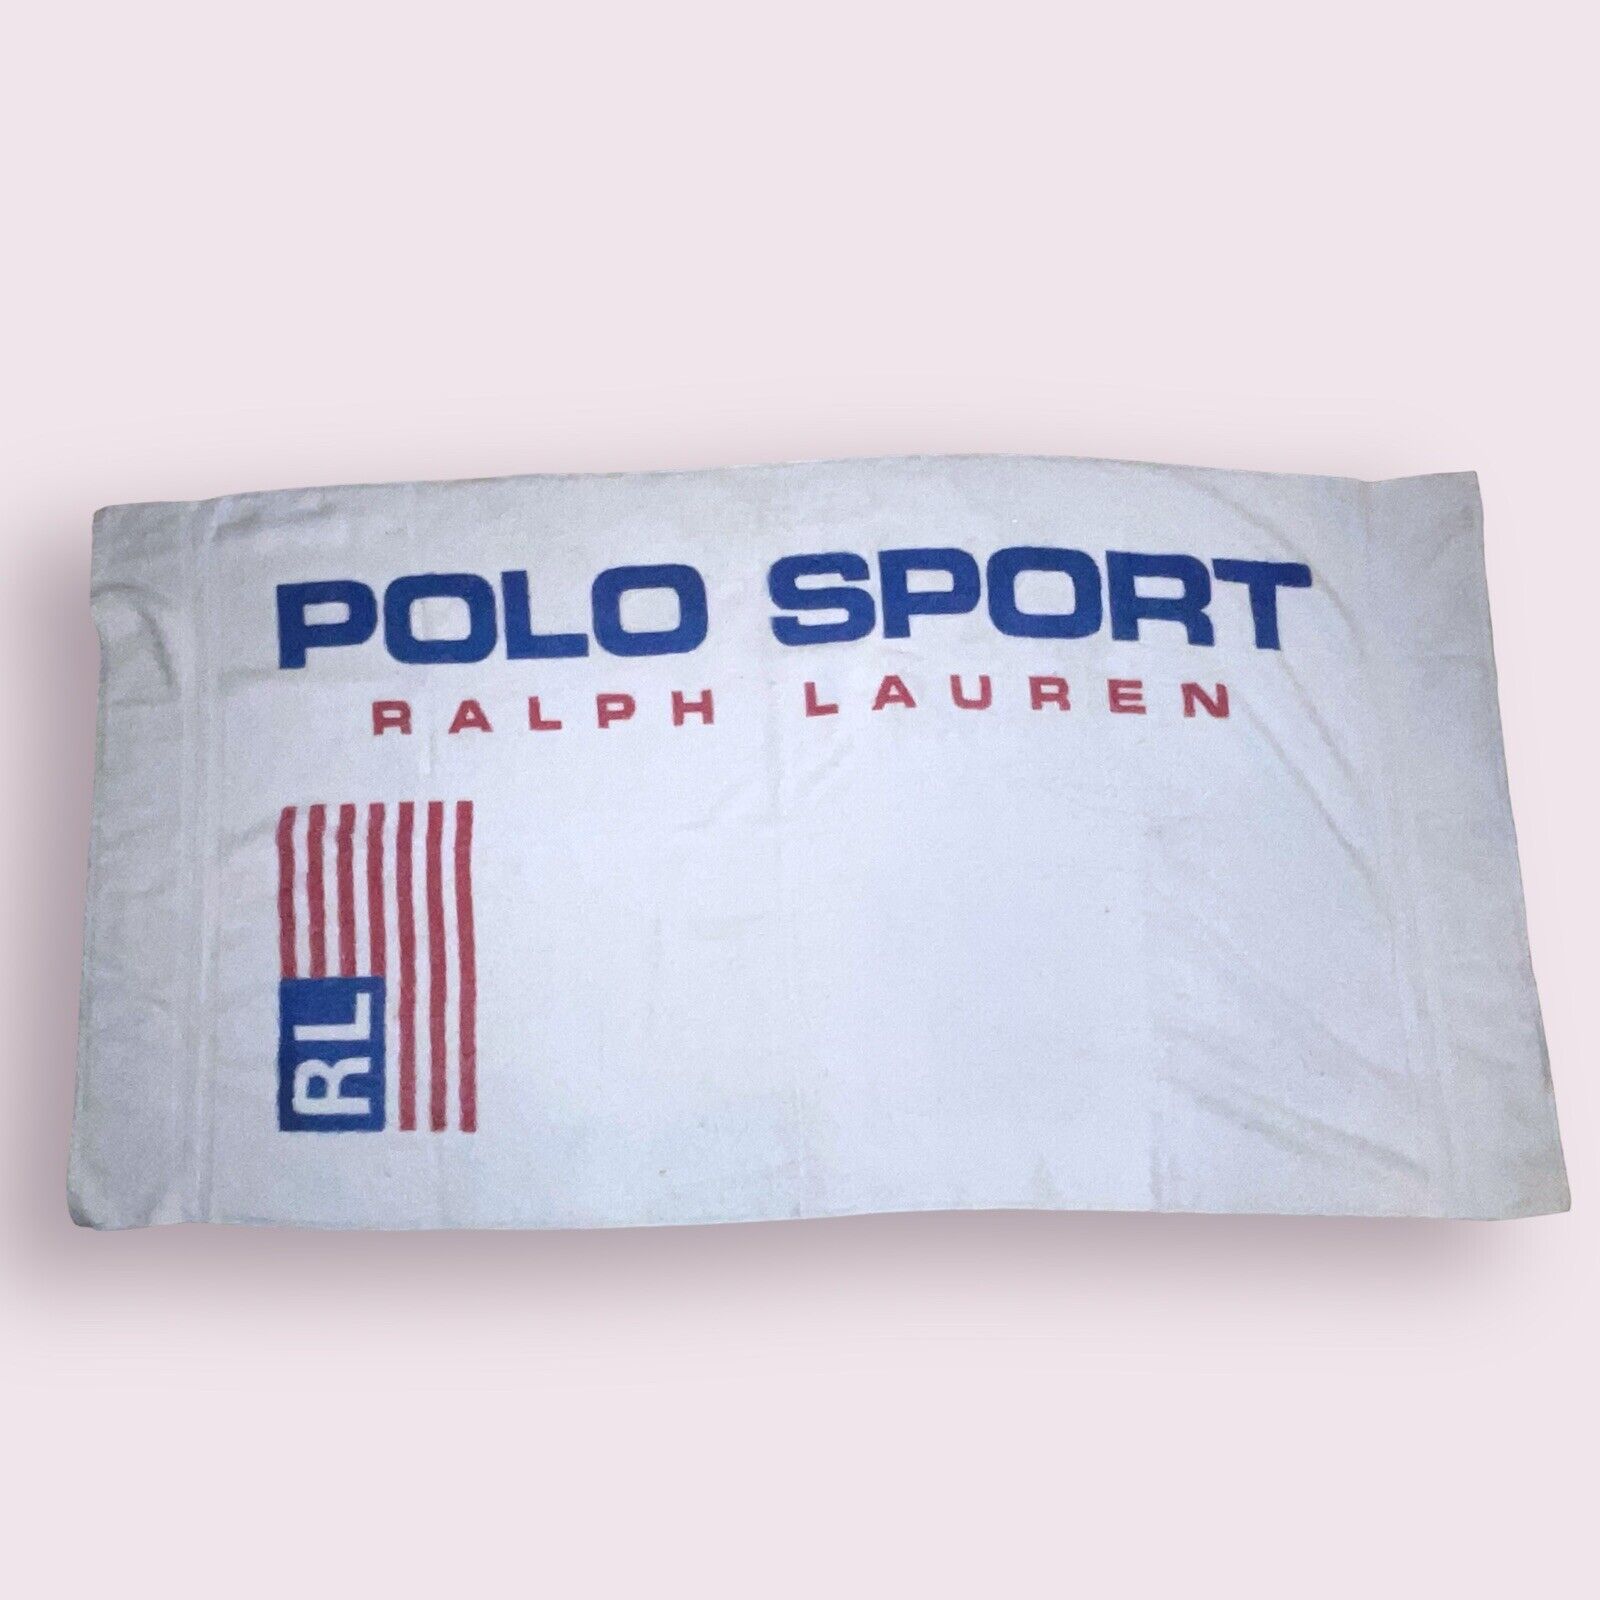 Vintage 1990's Polo Sport Ralph Lauren SPELLOUT Flag Beach Bath Towel 65” x 33”